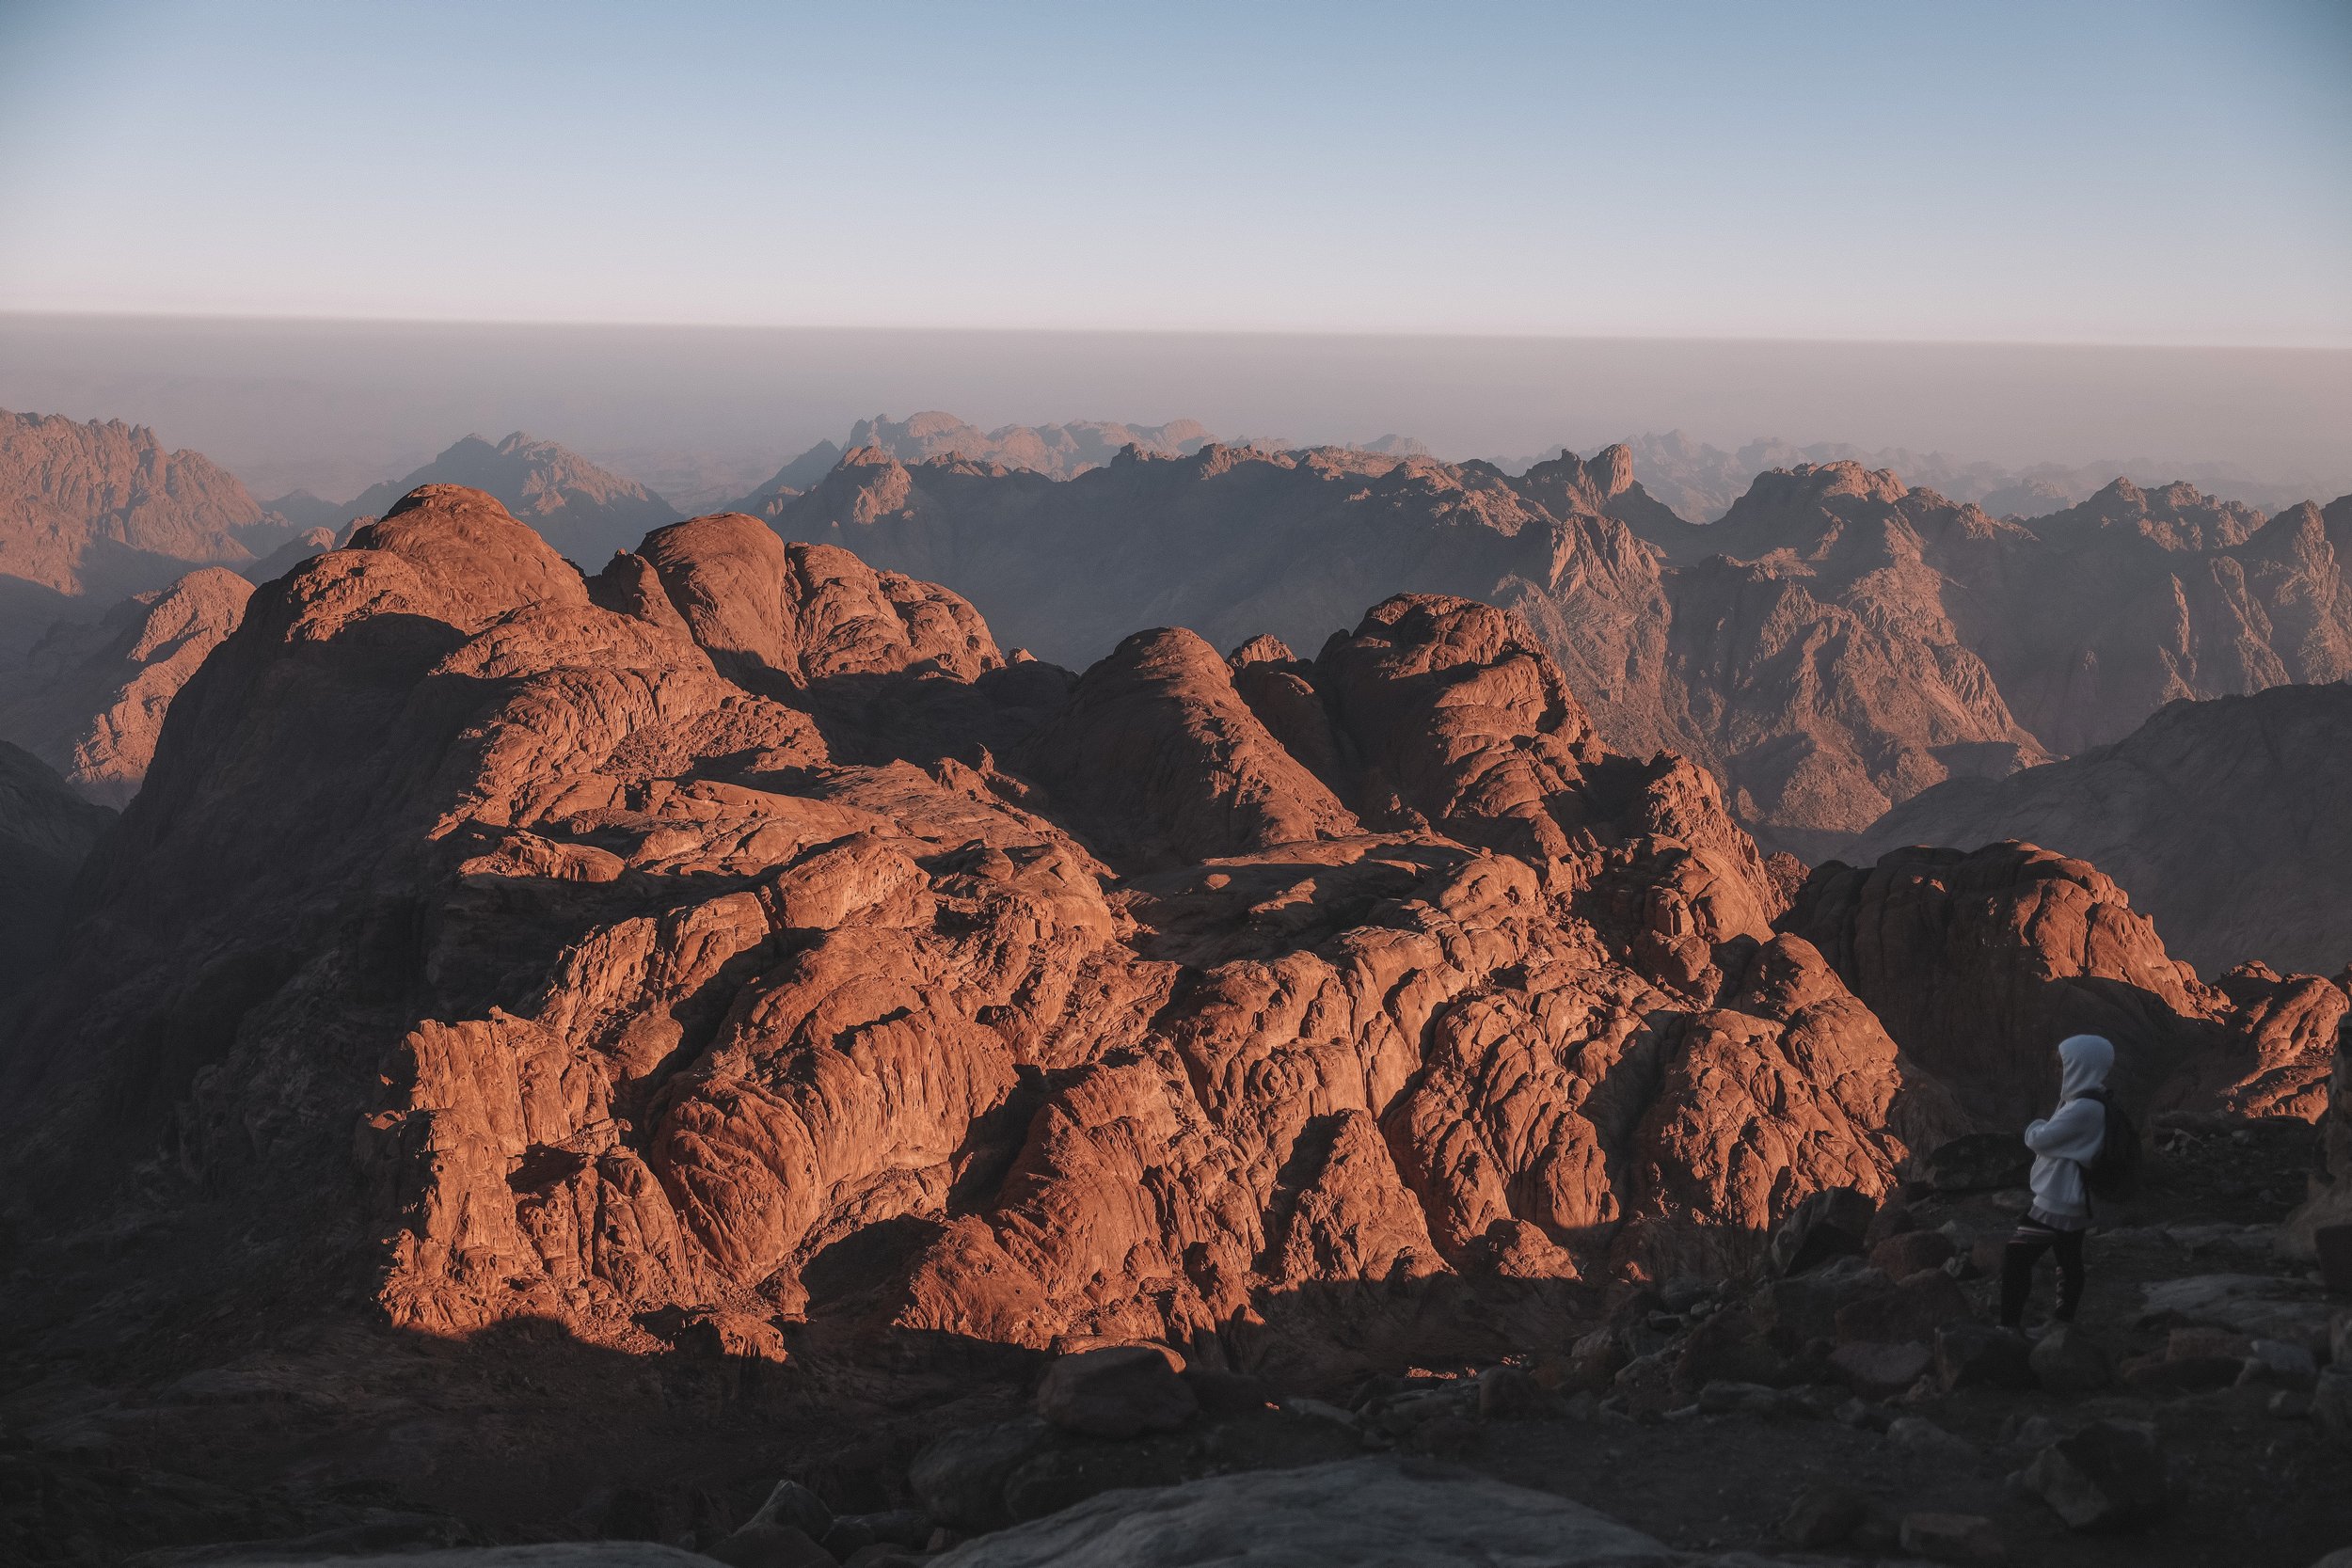 More rock formation at the summit of Mount Sinai - Sinai Peninsula - Egypt